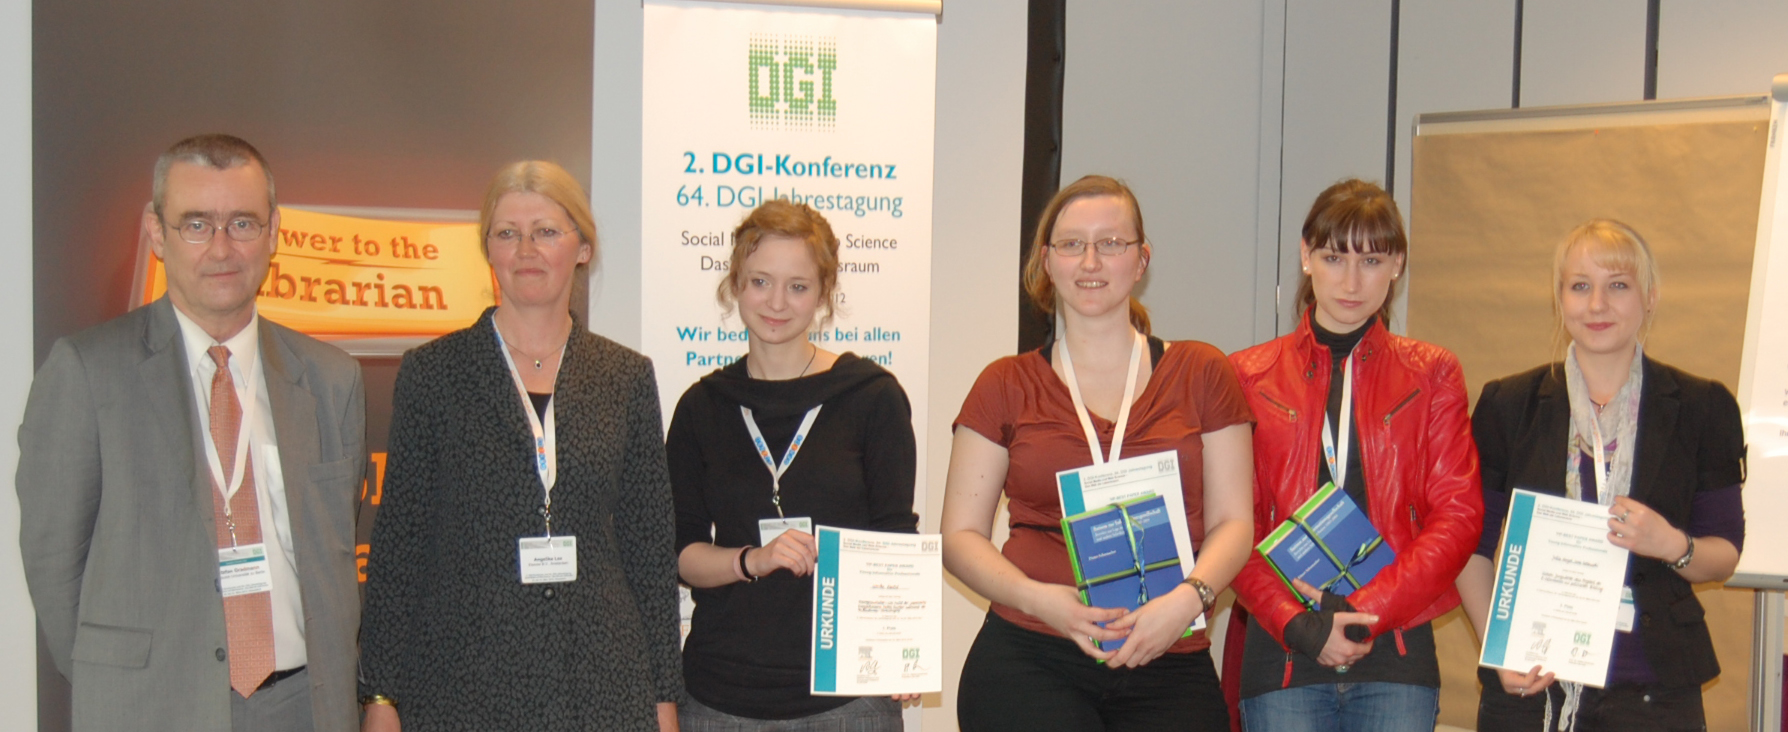 Siegerehrung YIP Award bei der DGI-Konferenz 2012